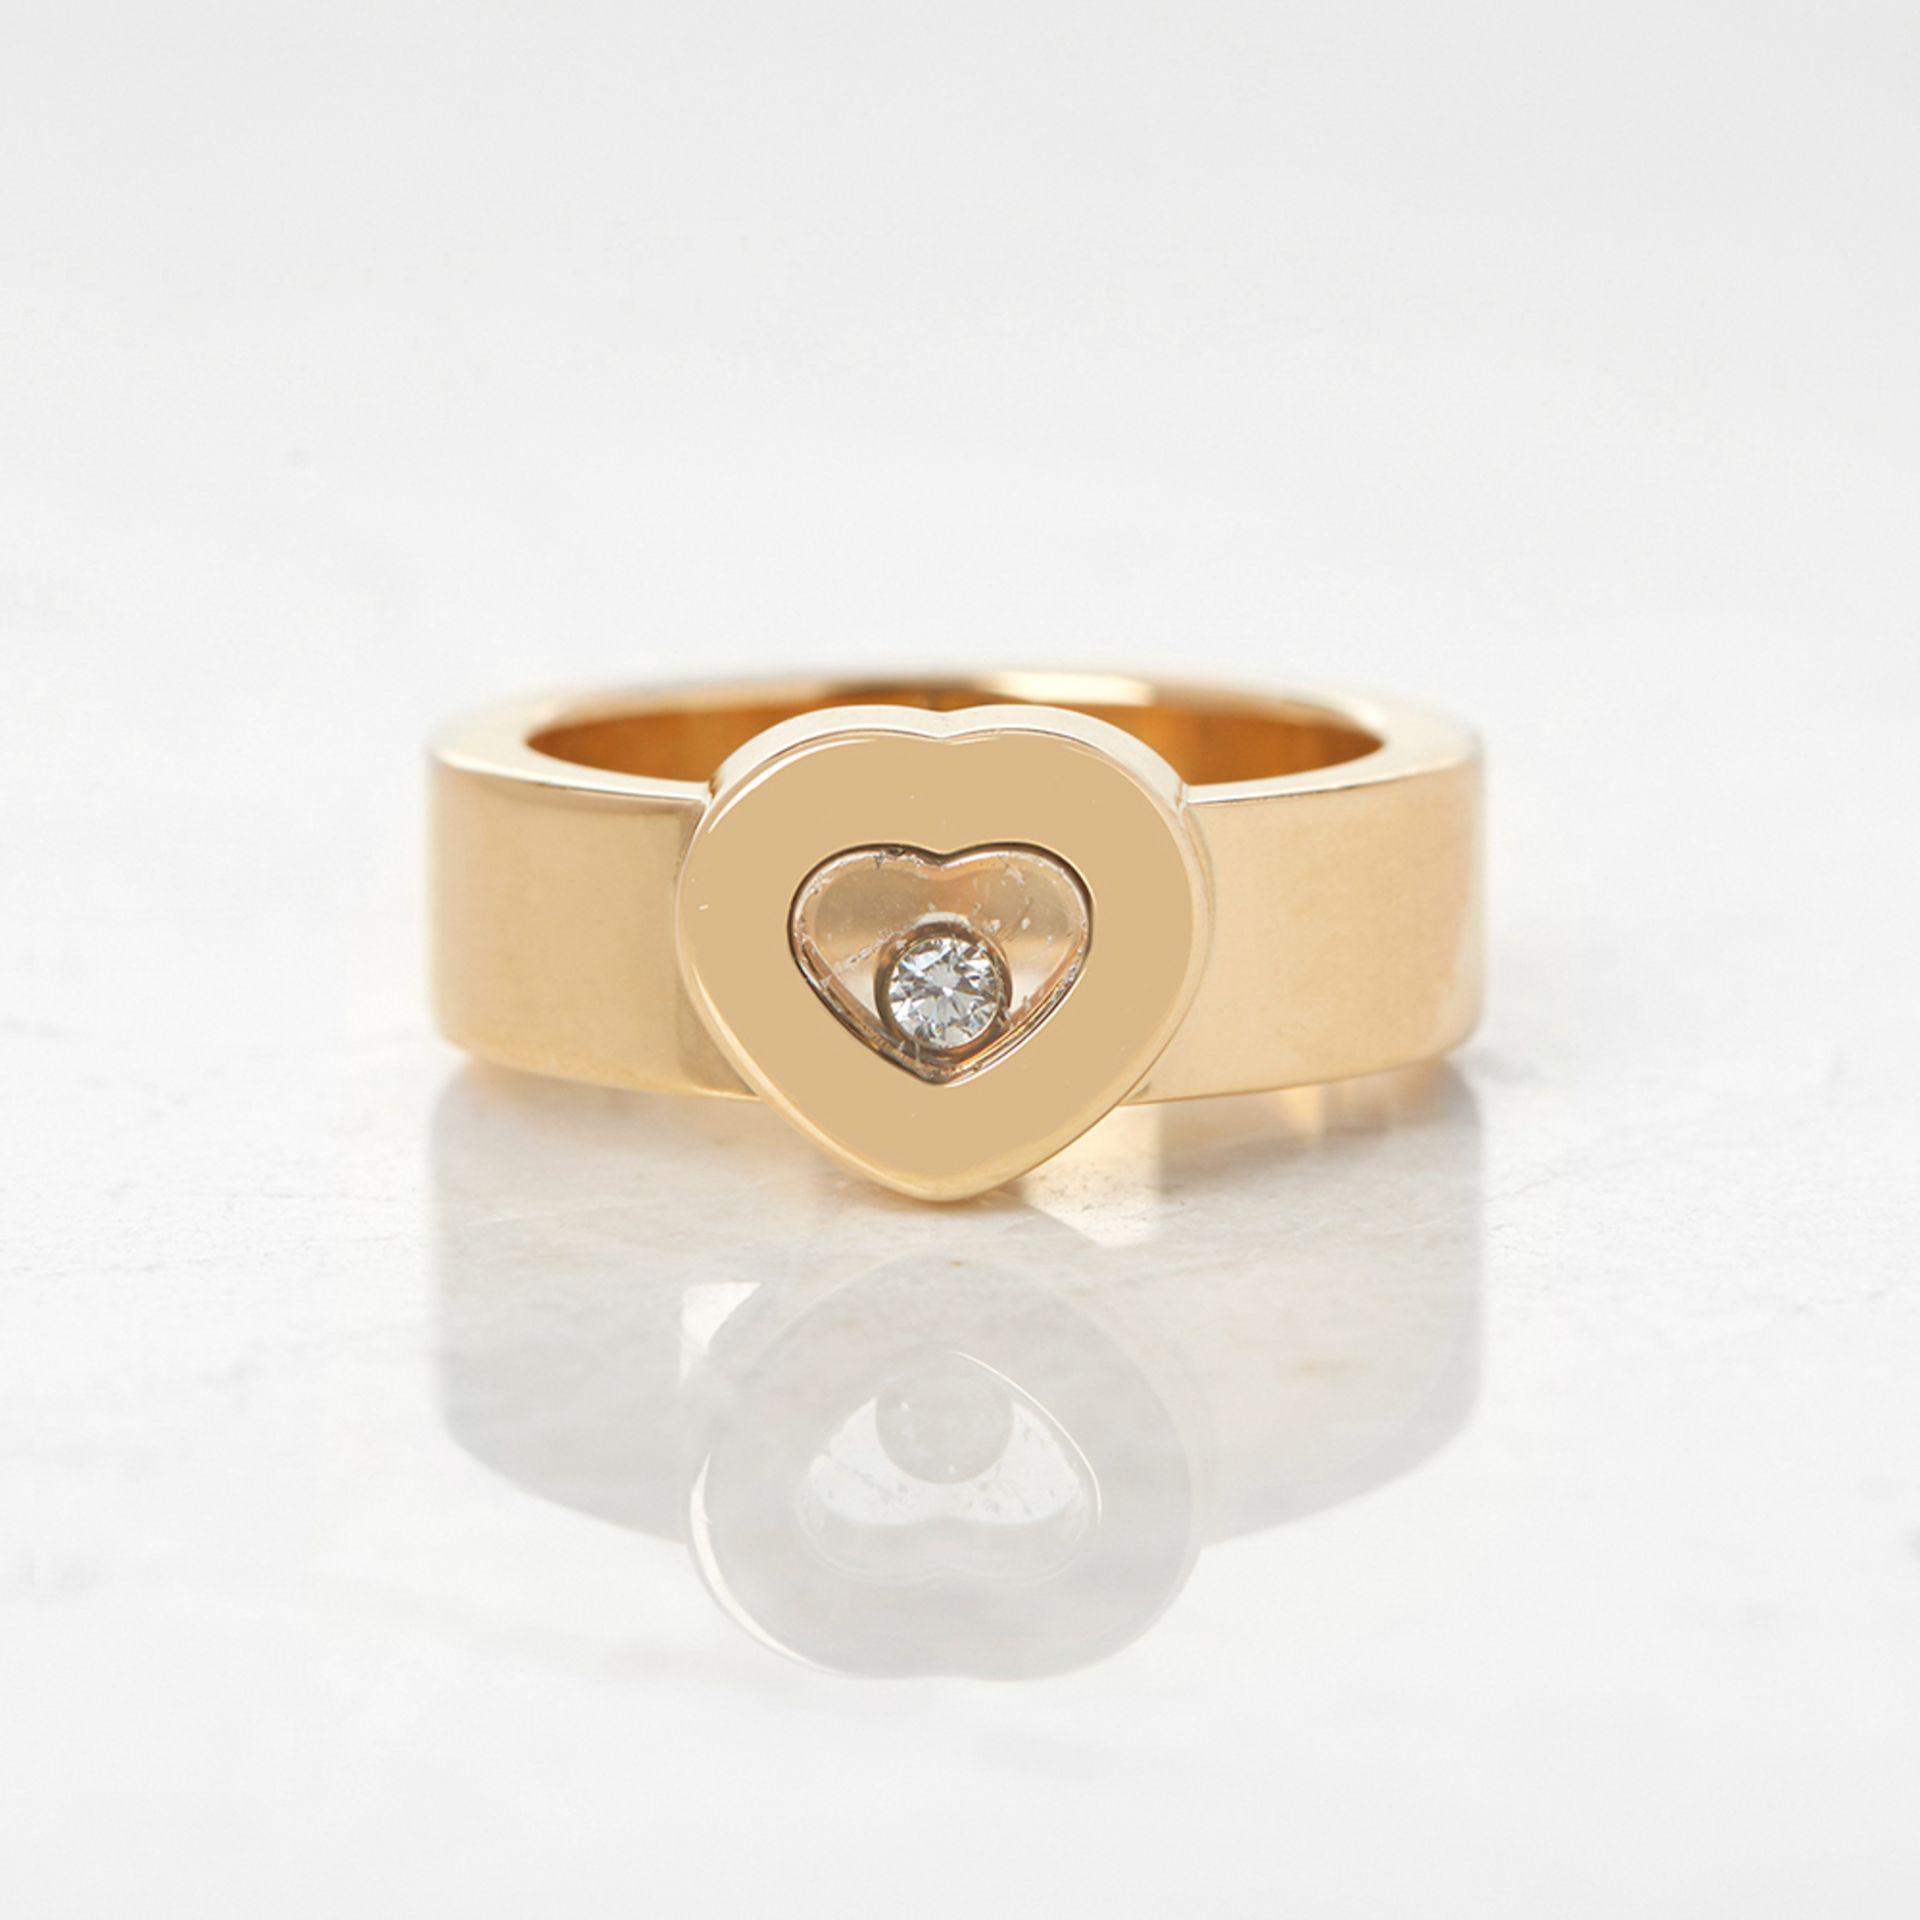 Chopard 18k Yellow Gold Heart Happy Diamonds Ring Size M.5 - Image 2 of 6